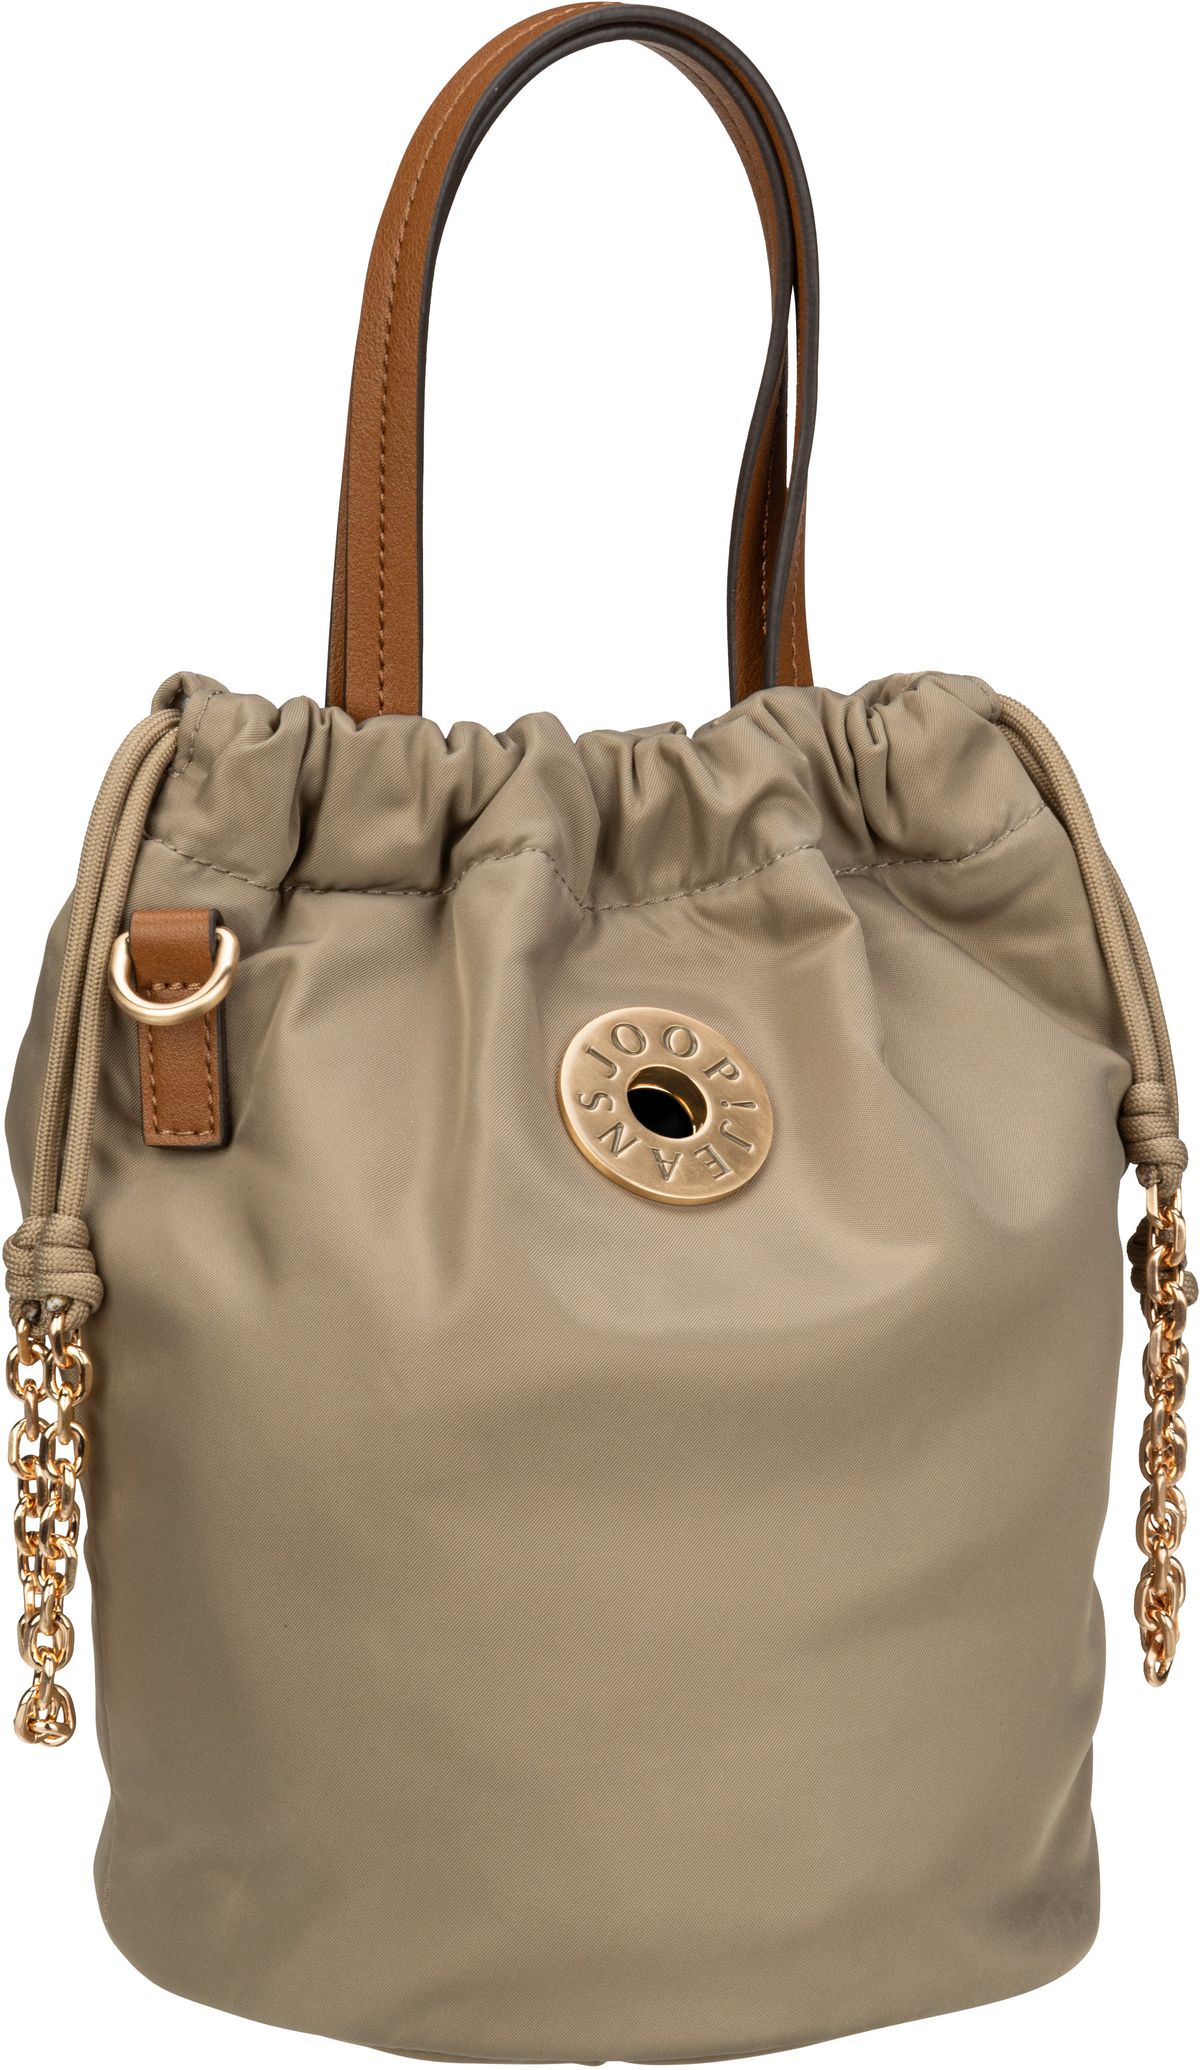 Joop Vita Puro Donna Handbag SVO  in Braun (7.7 Liter), Bucket Bag